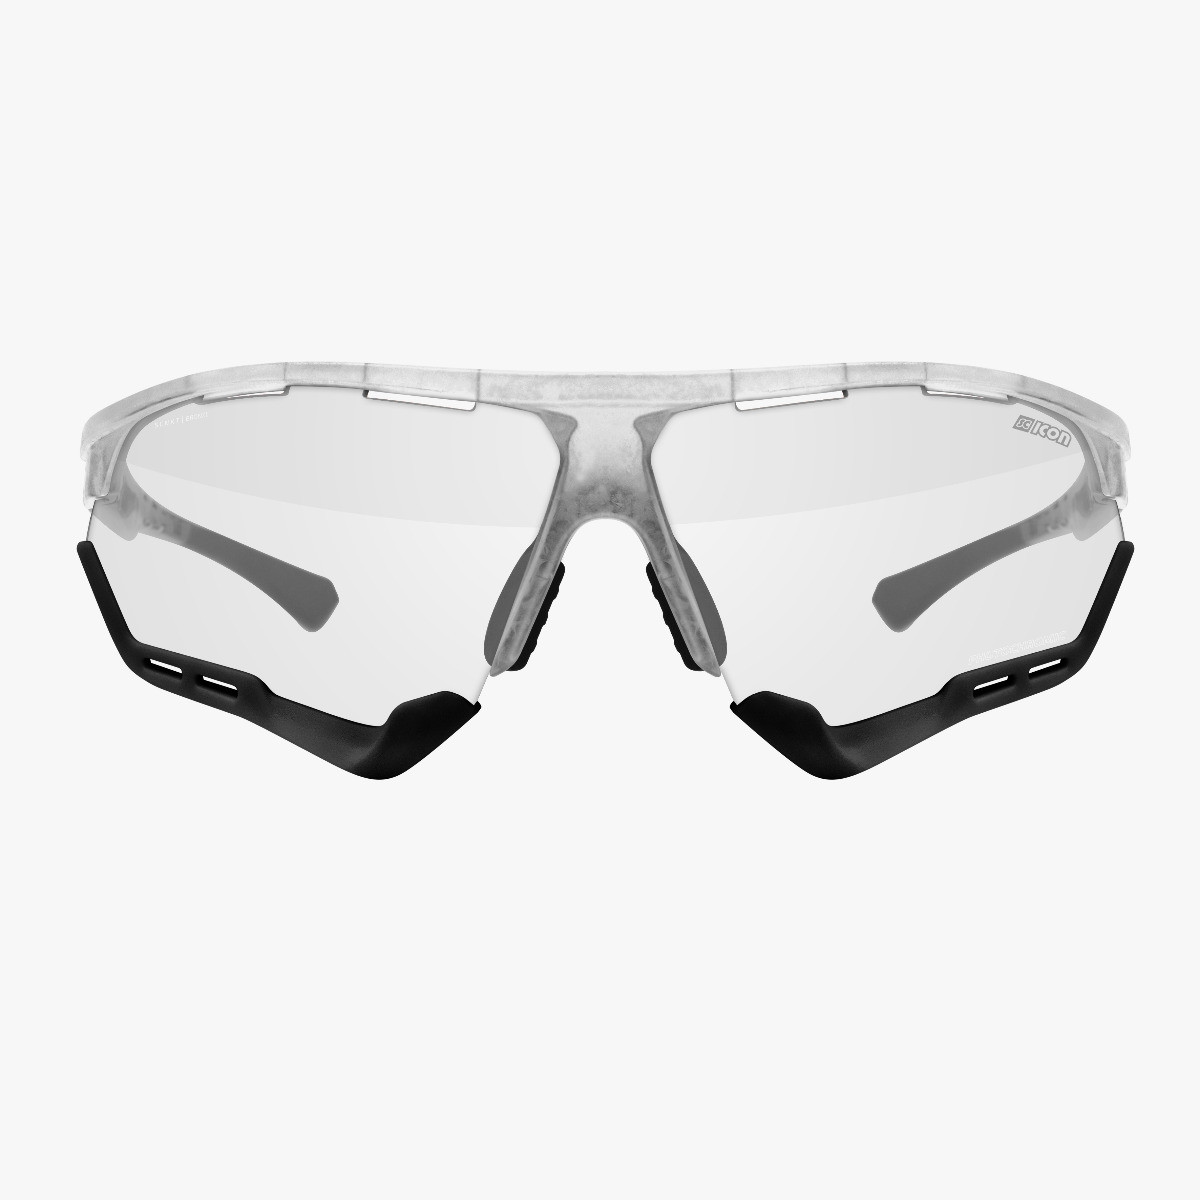 Aerocomfort cycling sunglasses scnxt photochromic frozen frame bronze lenses EY19170501
